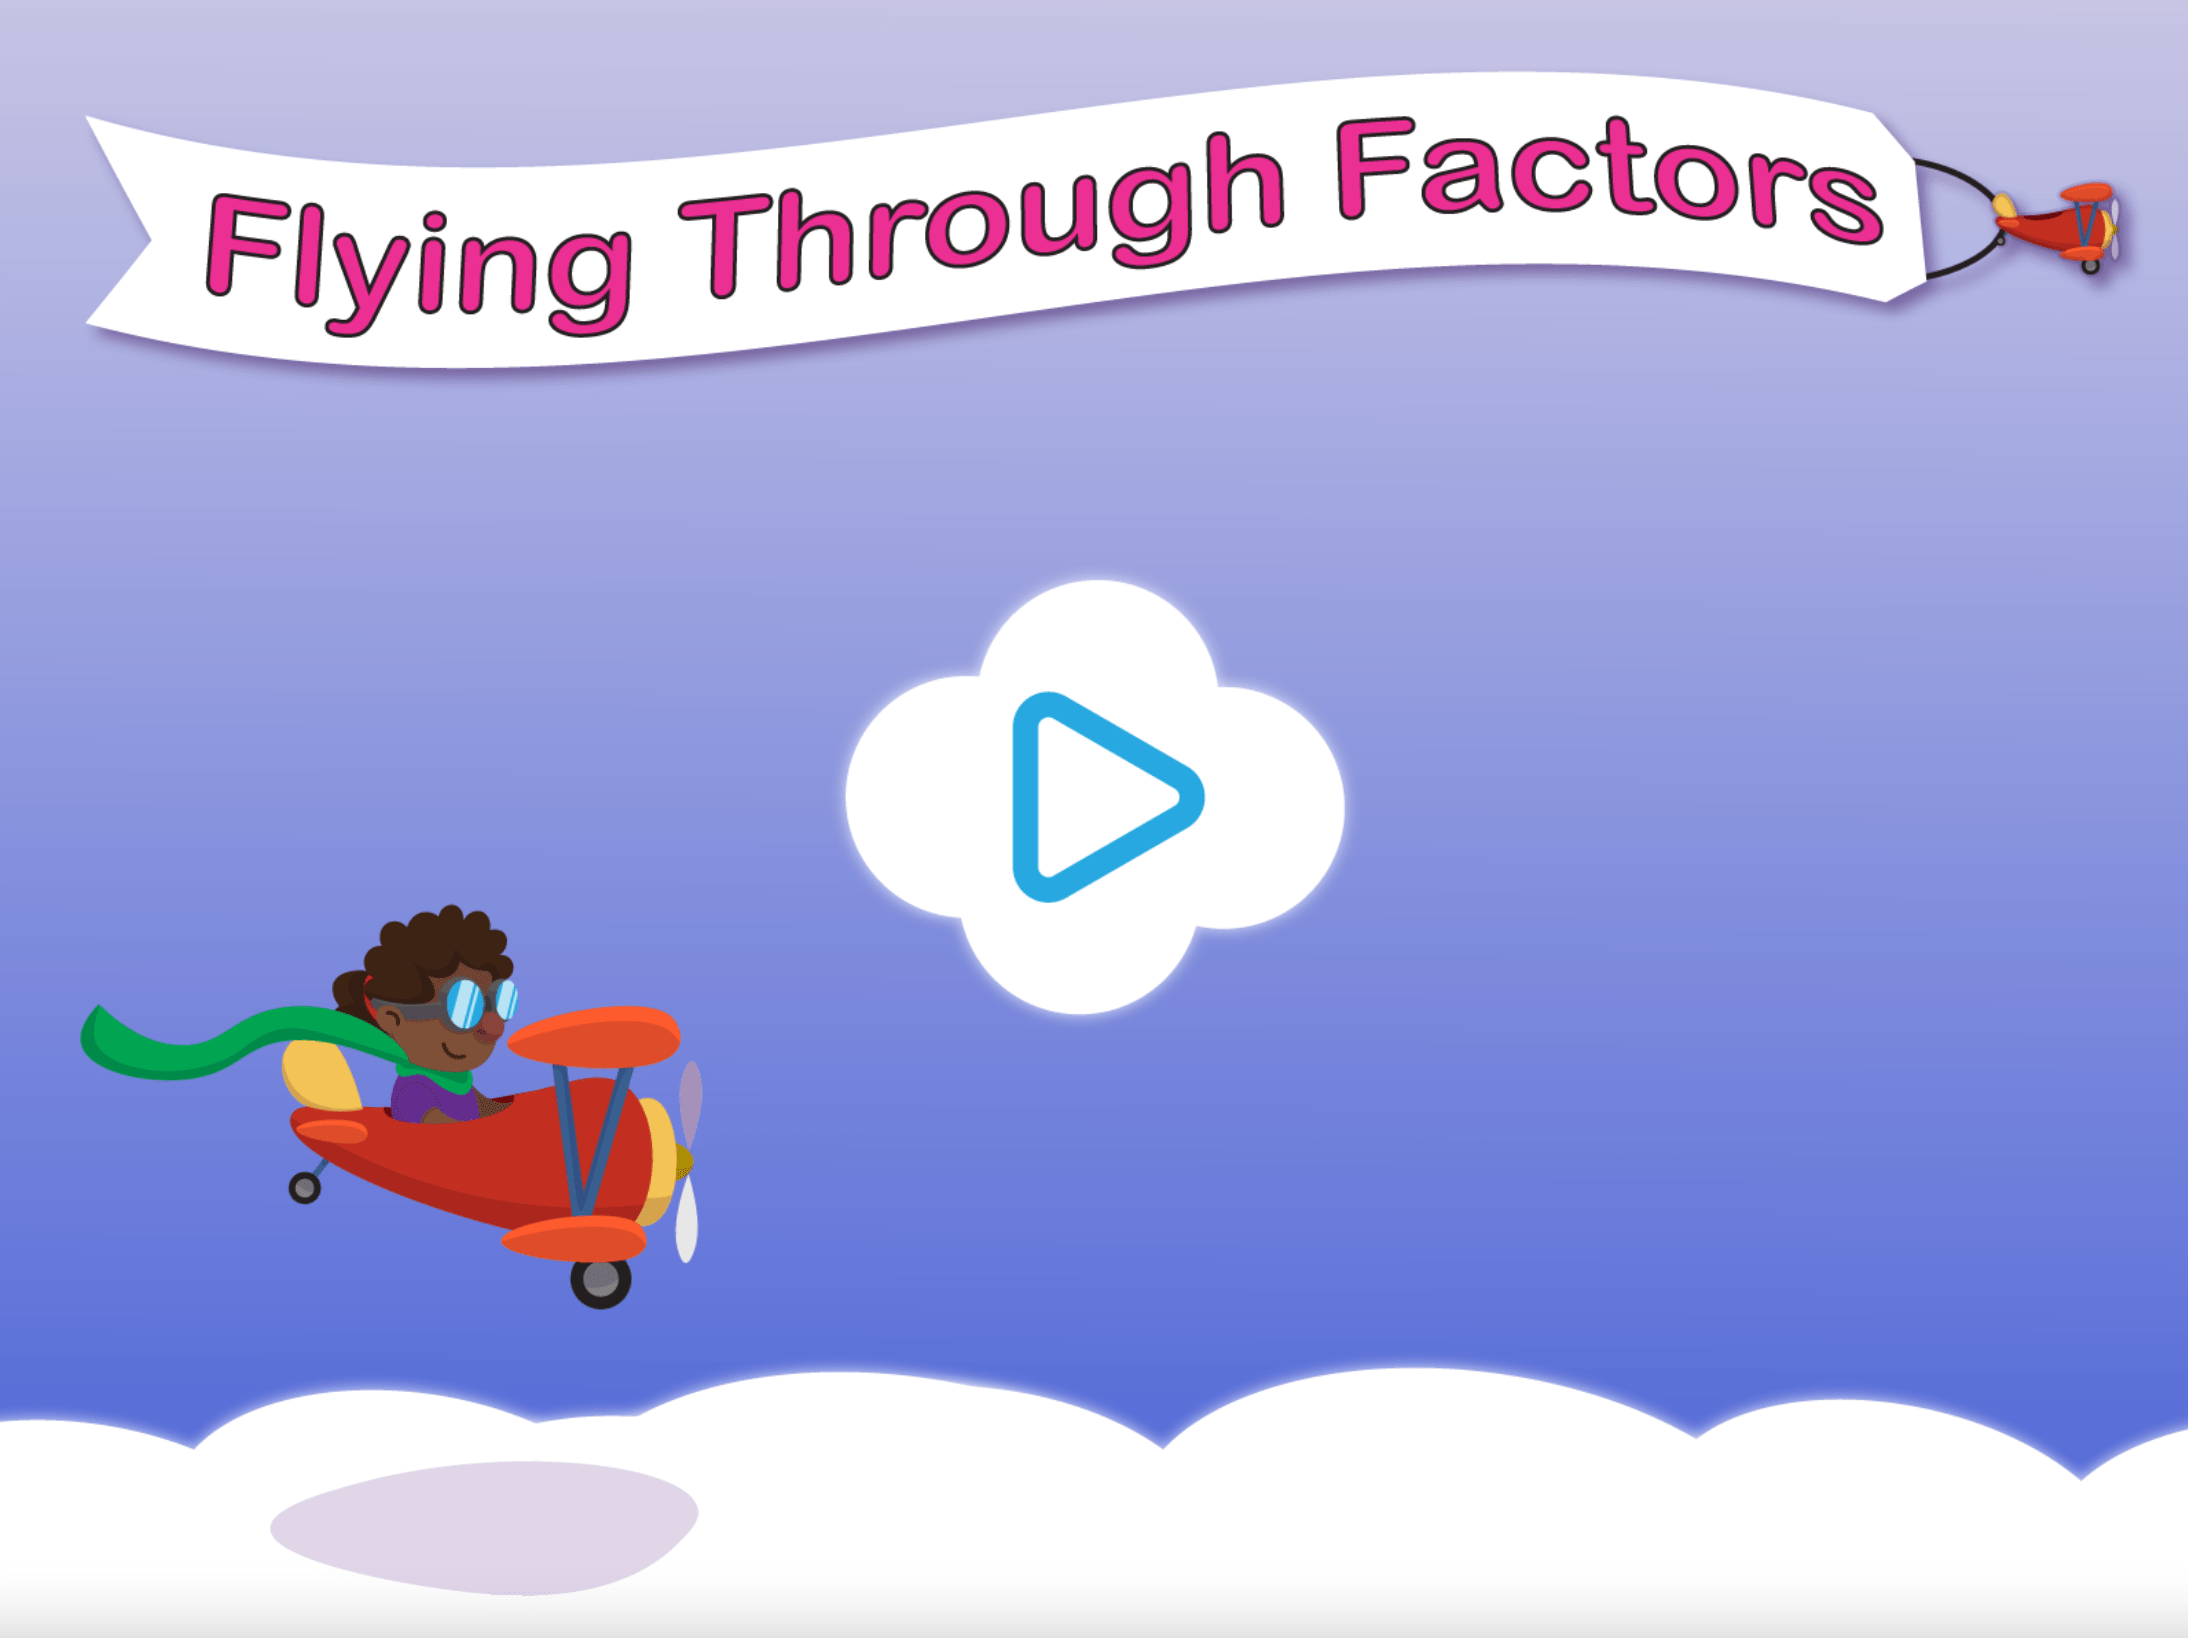 Flying Through Factors game